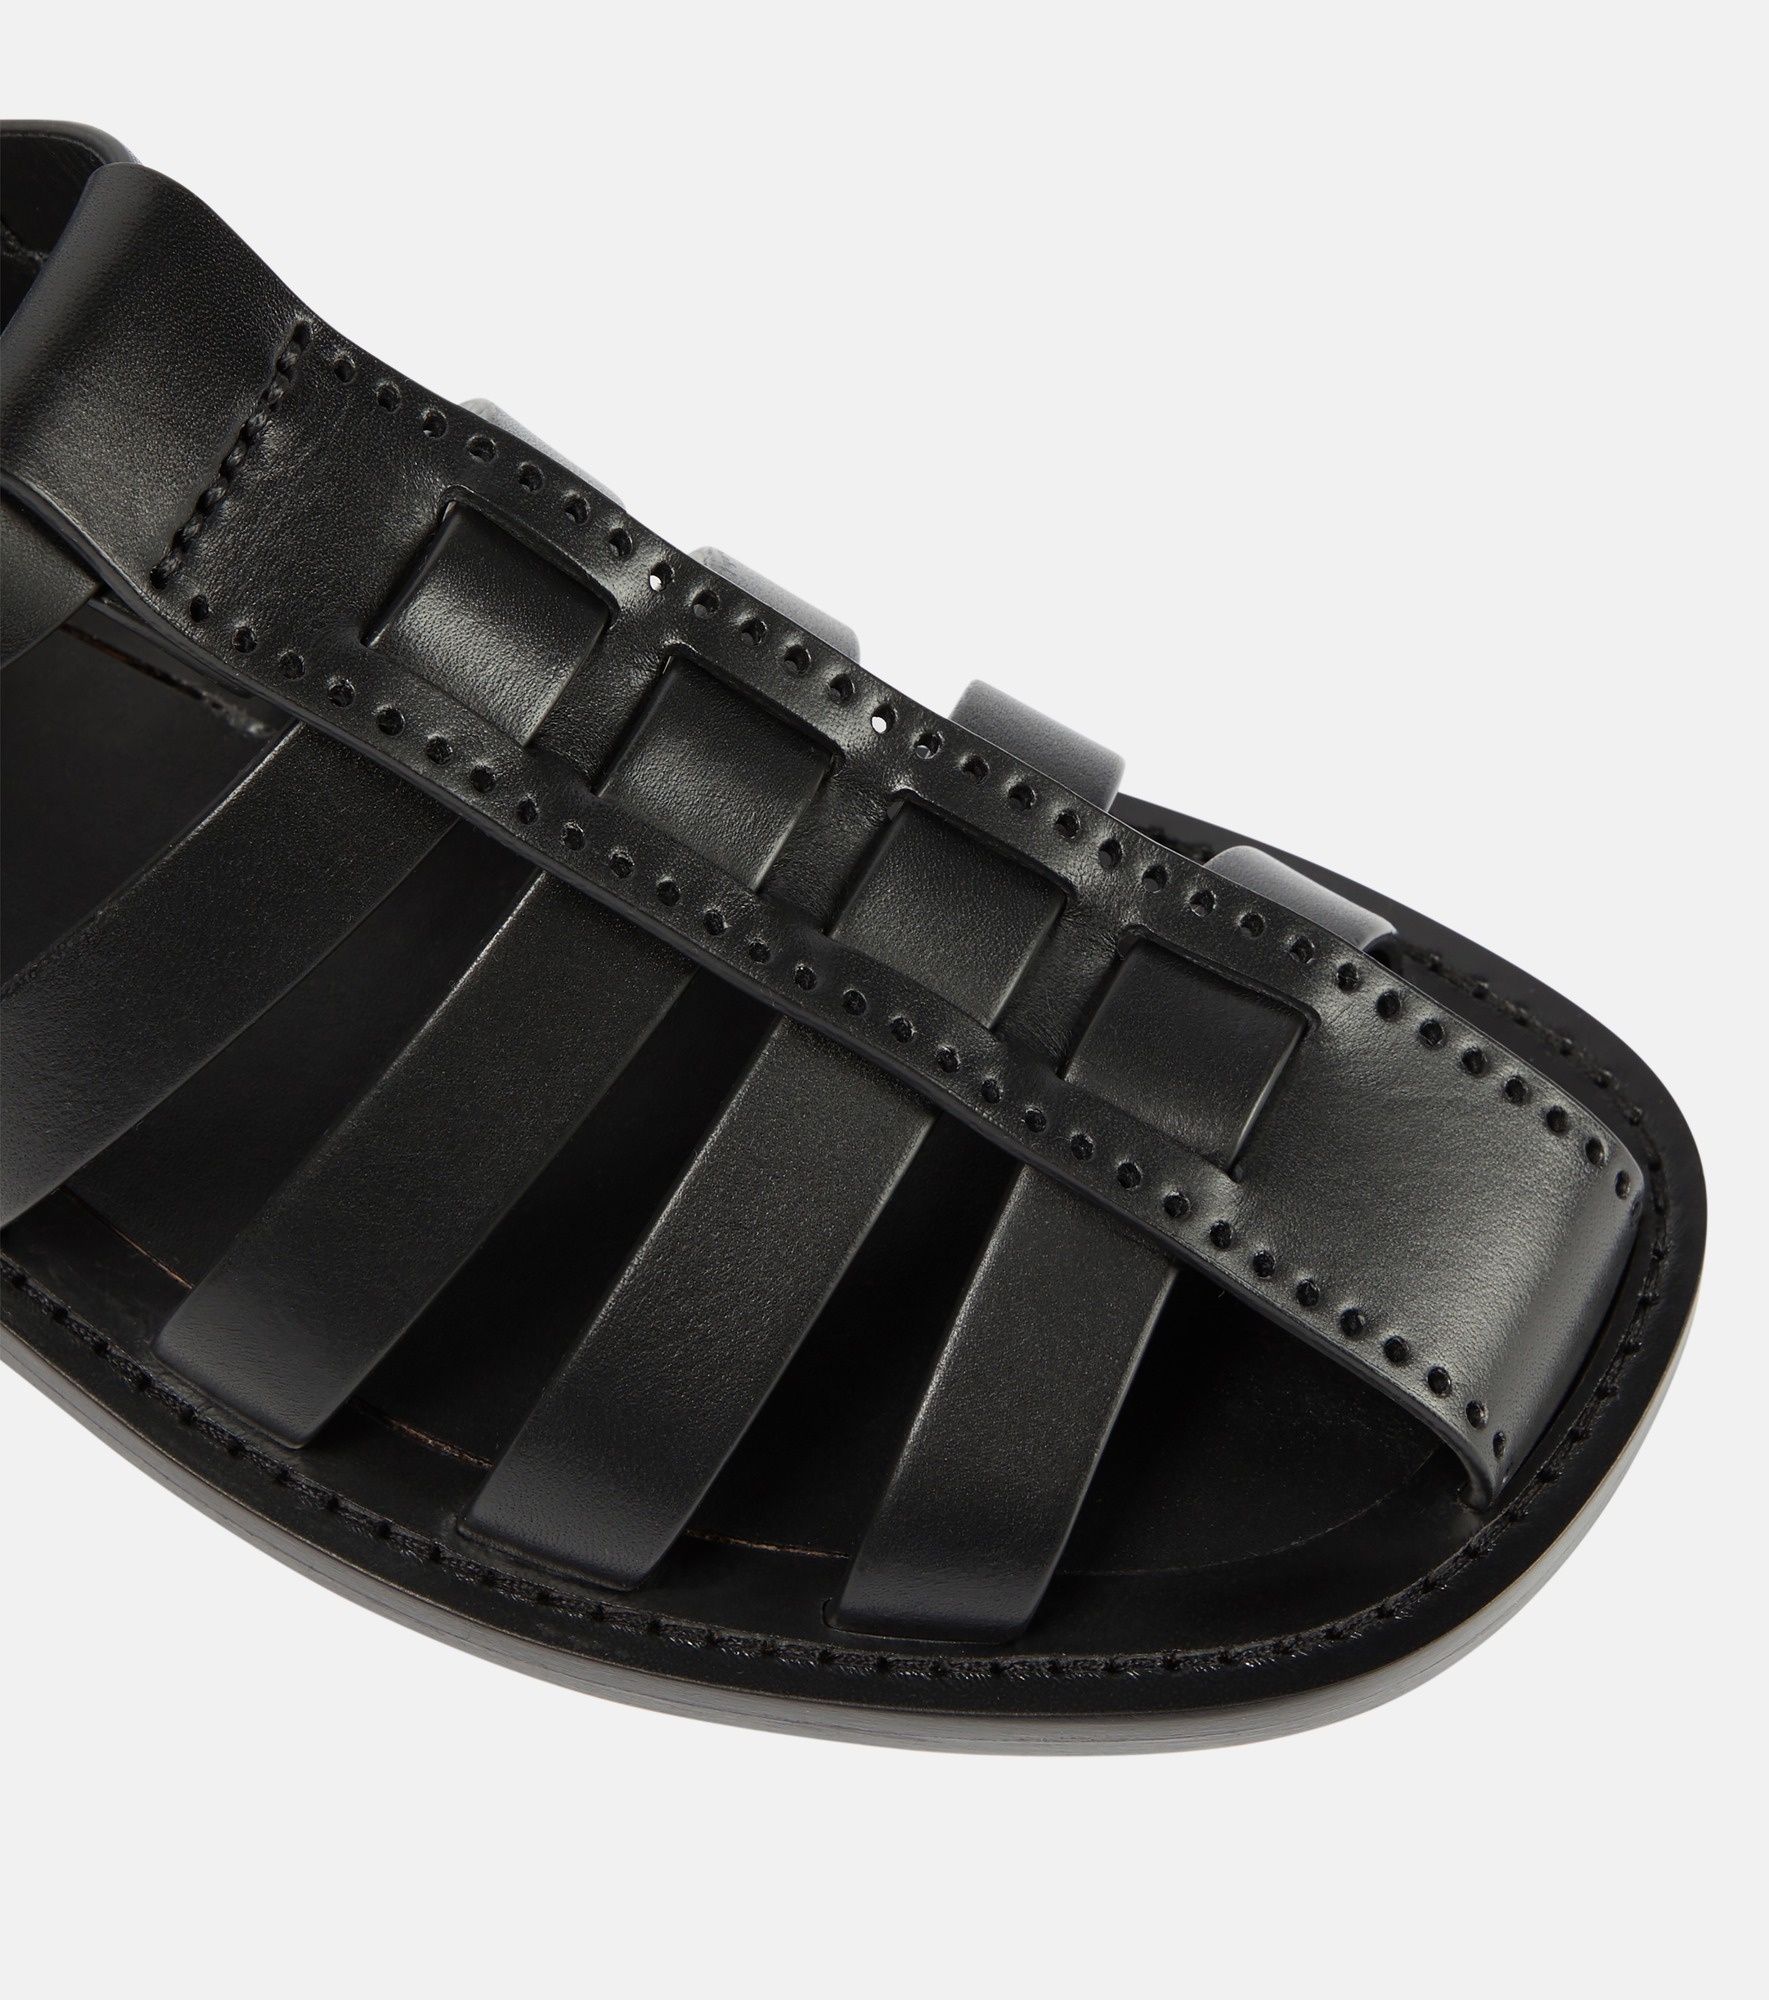 Pablo leather sandals - 6